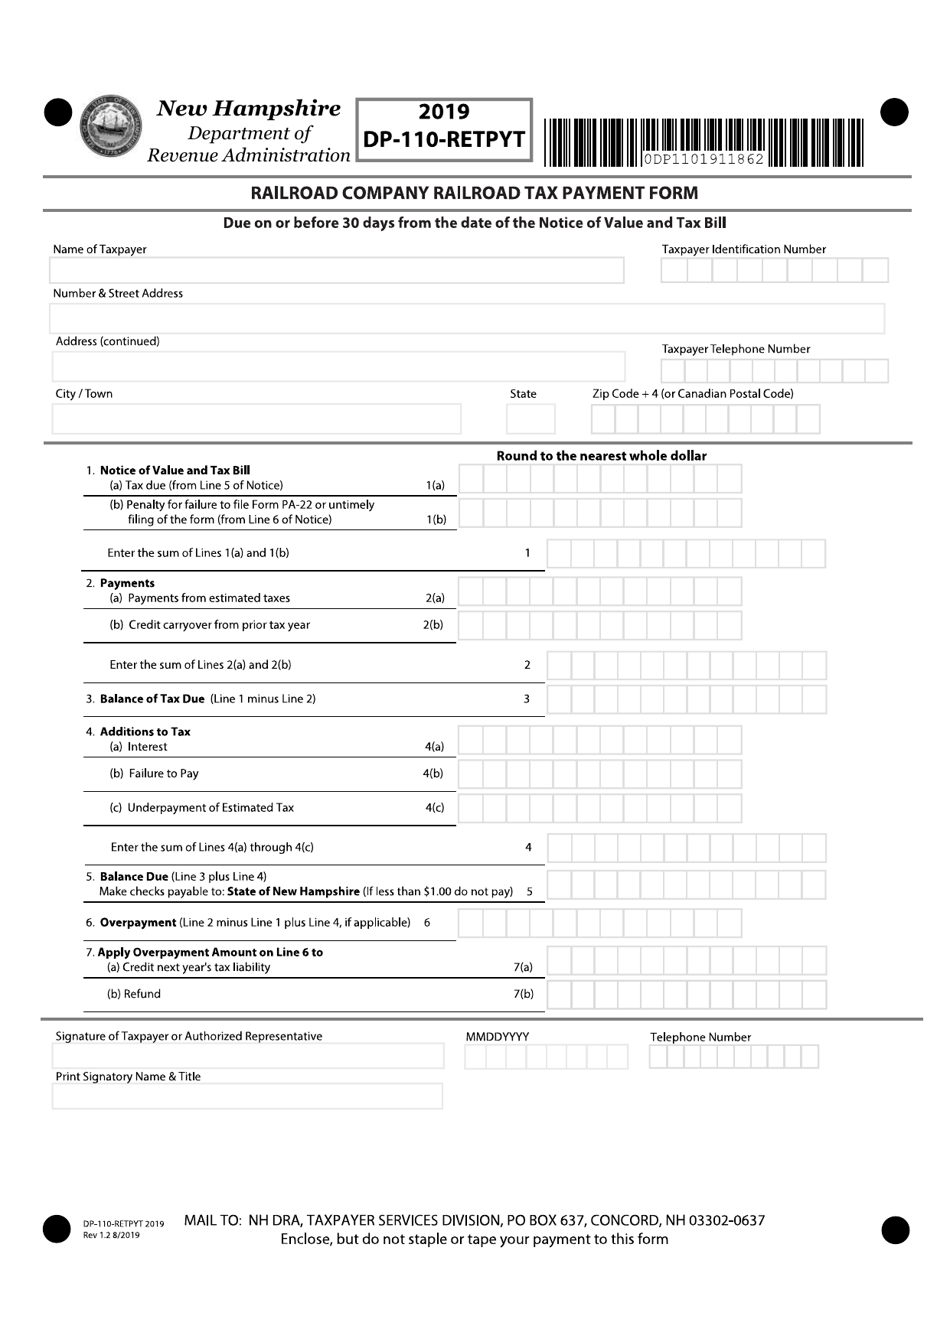 Form DP-110-RETPYT Railroad Company Railroad Tax Payment Form - New Hampshire, Page 1